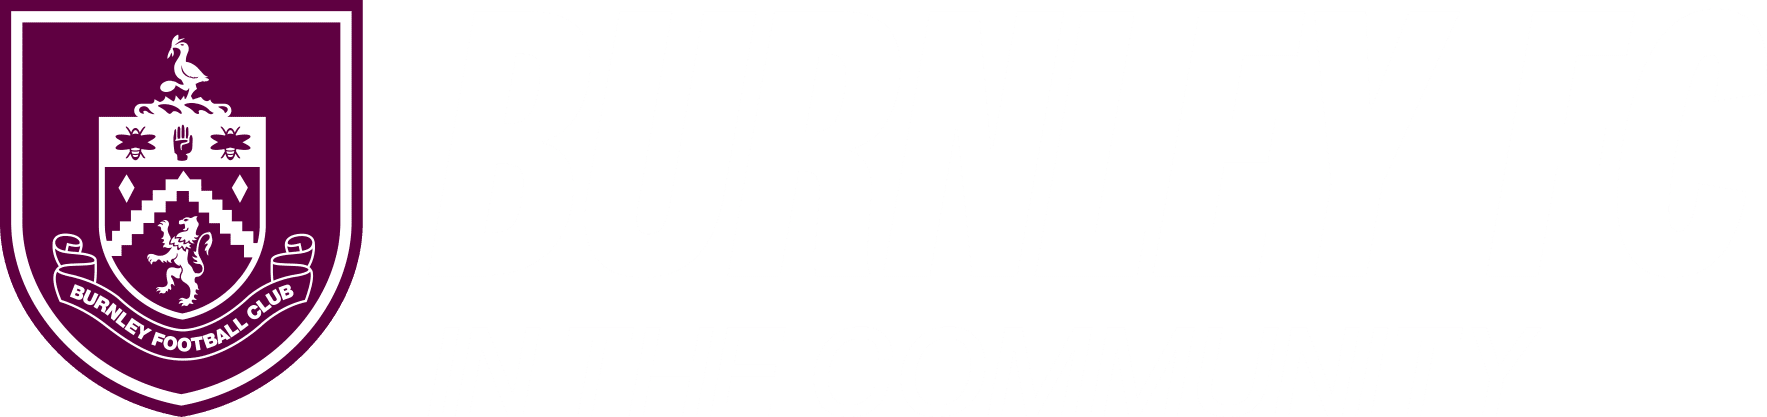 Burnley FC in the community logo white